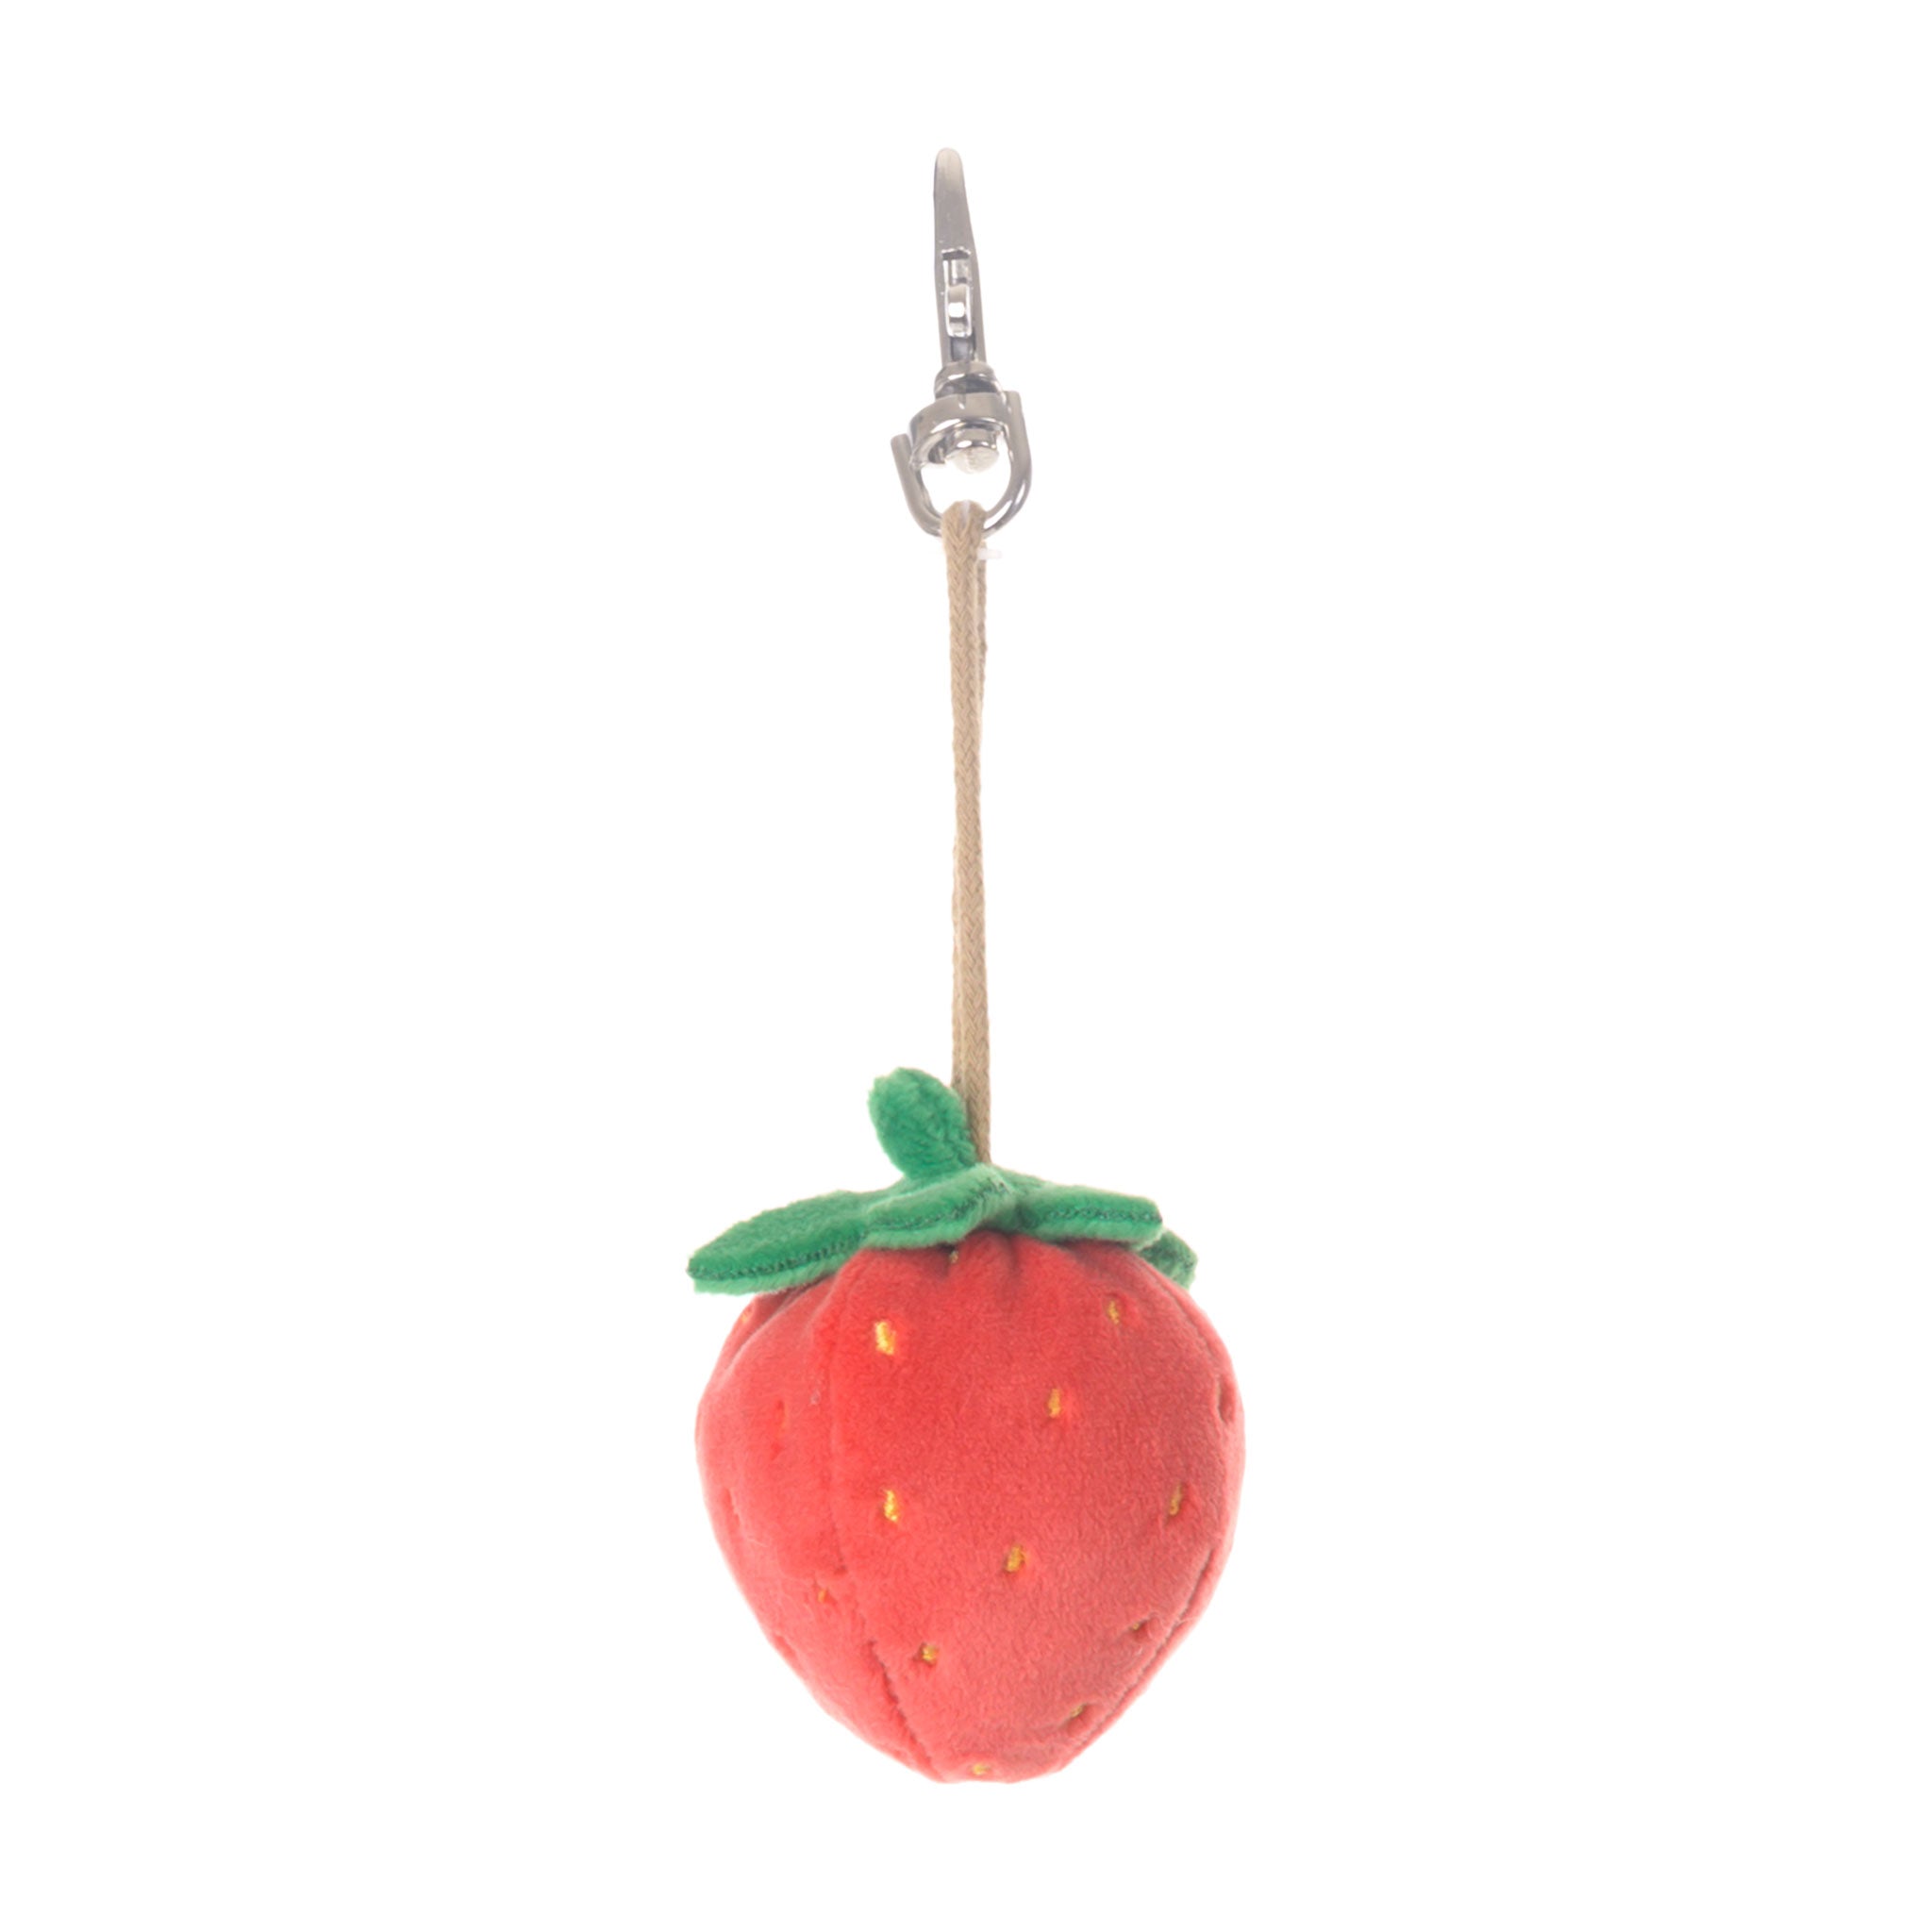 Strawberry Key Ring - Red